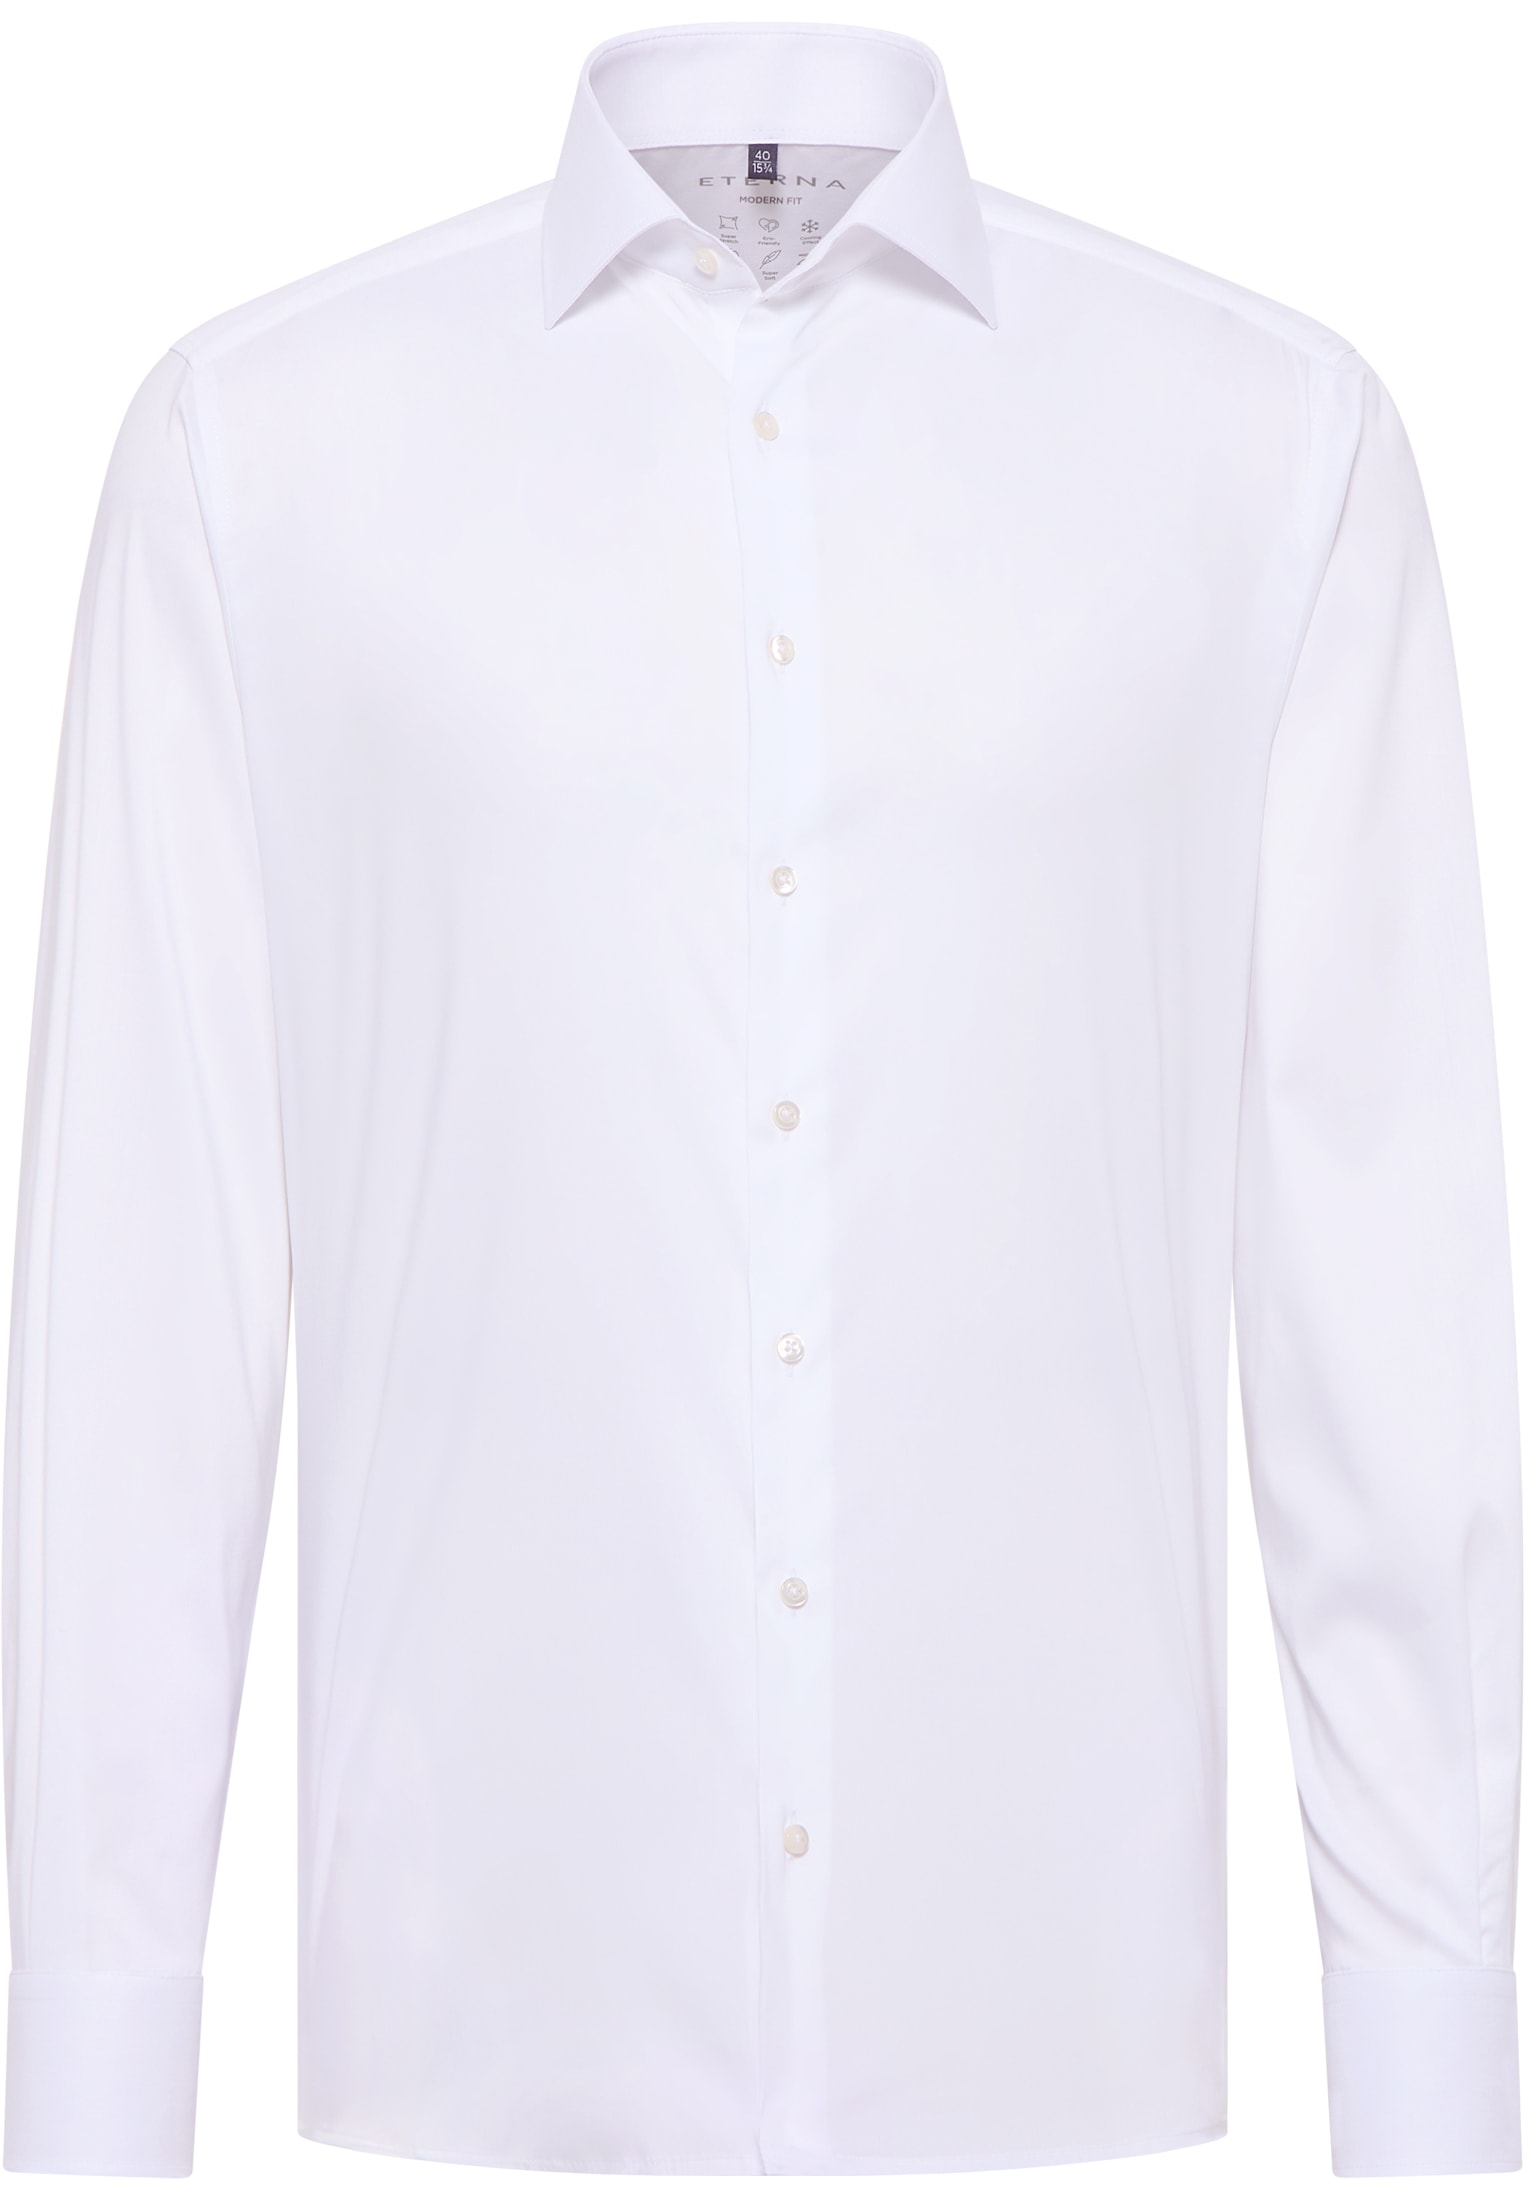 MODERN FIT Performance Shirt weiß | | | weiß unifarben Langarm | 1SH02224-00-01-39-1/1 in 39